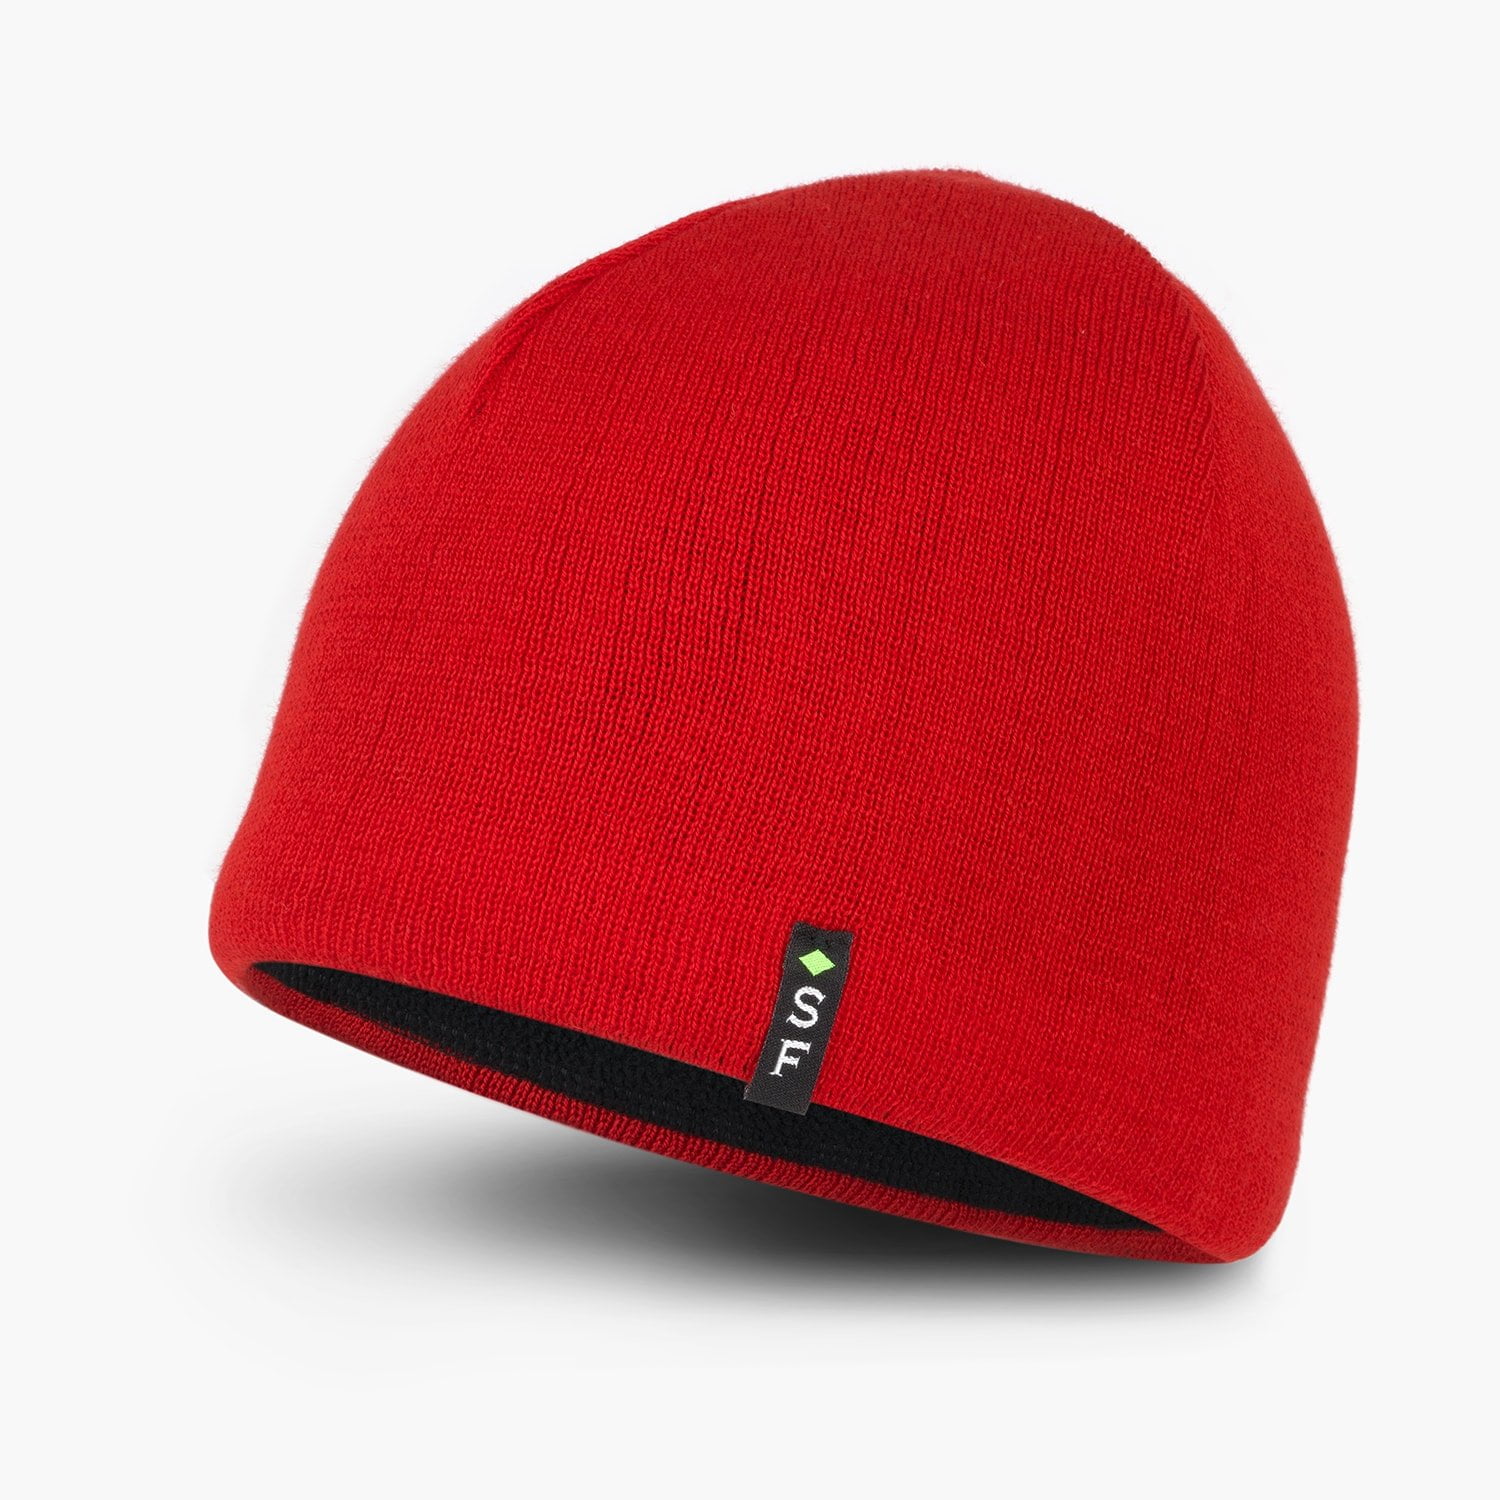 Cap with fleece lp basic red